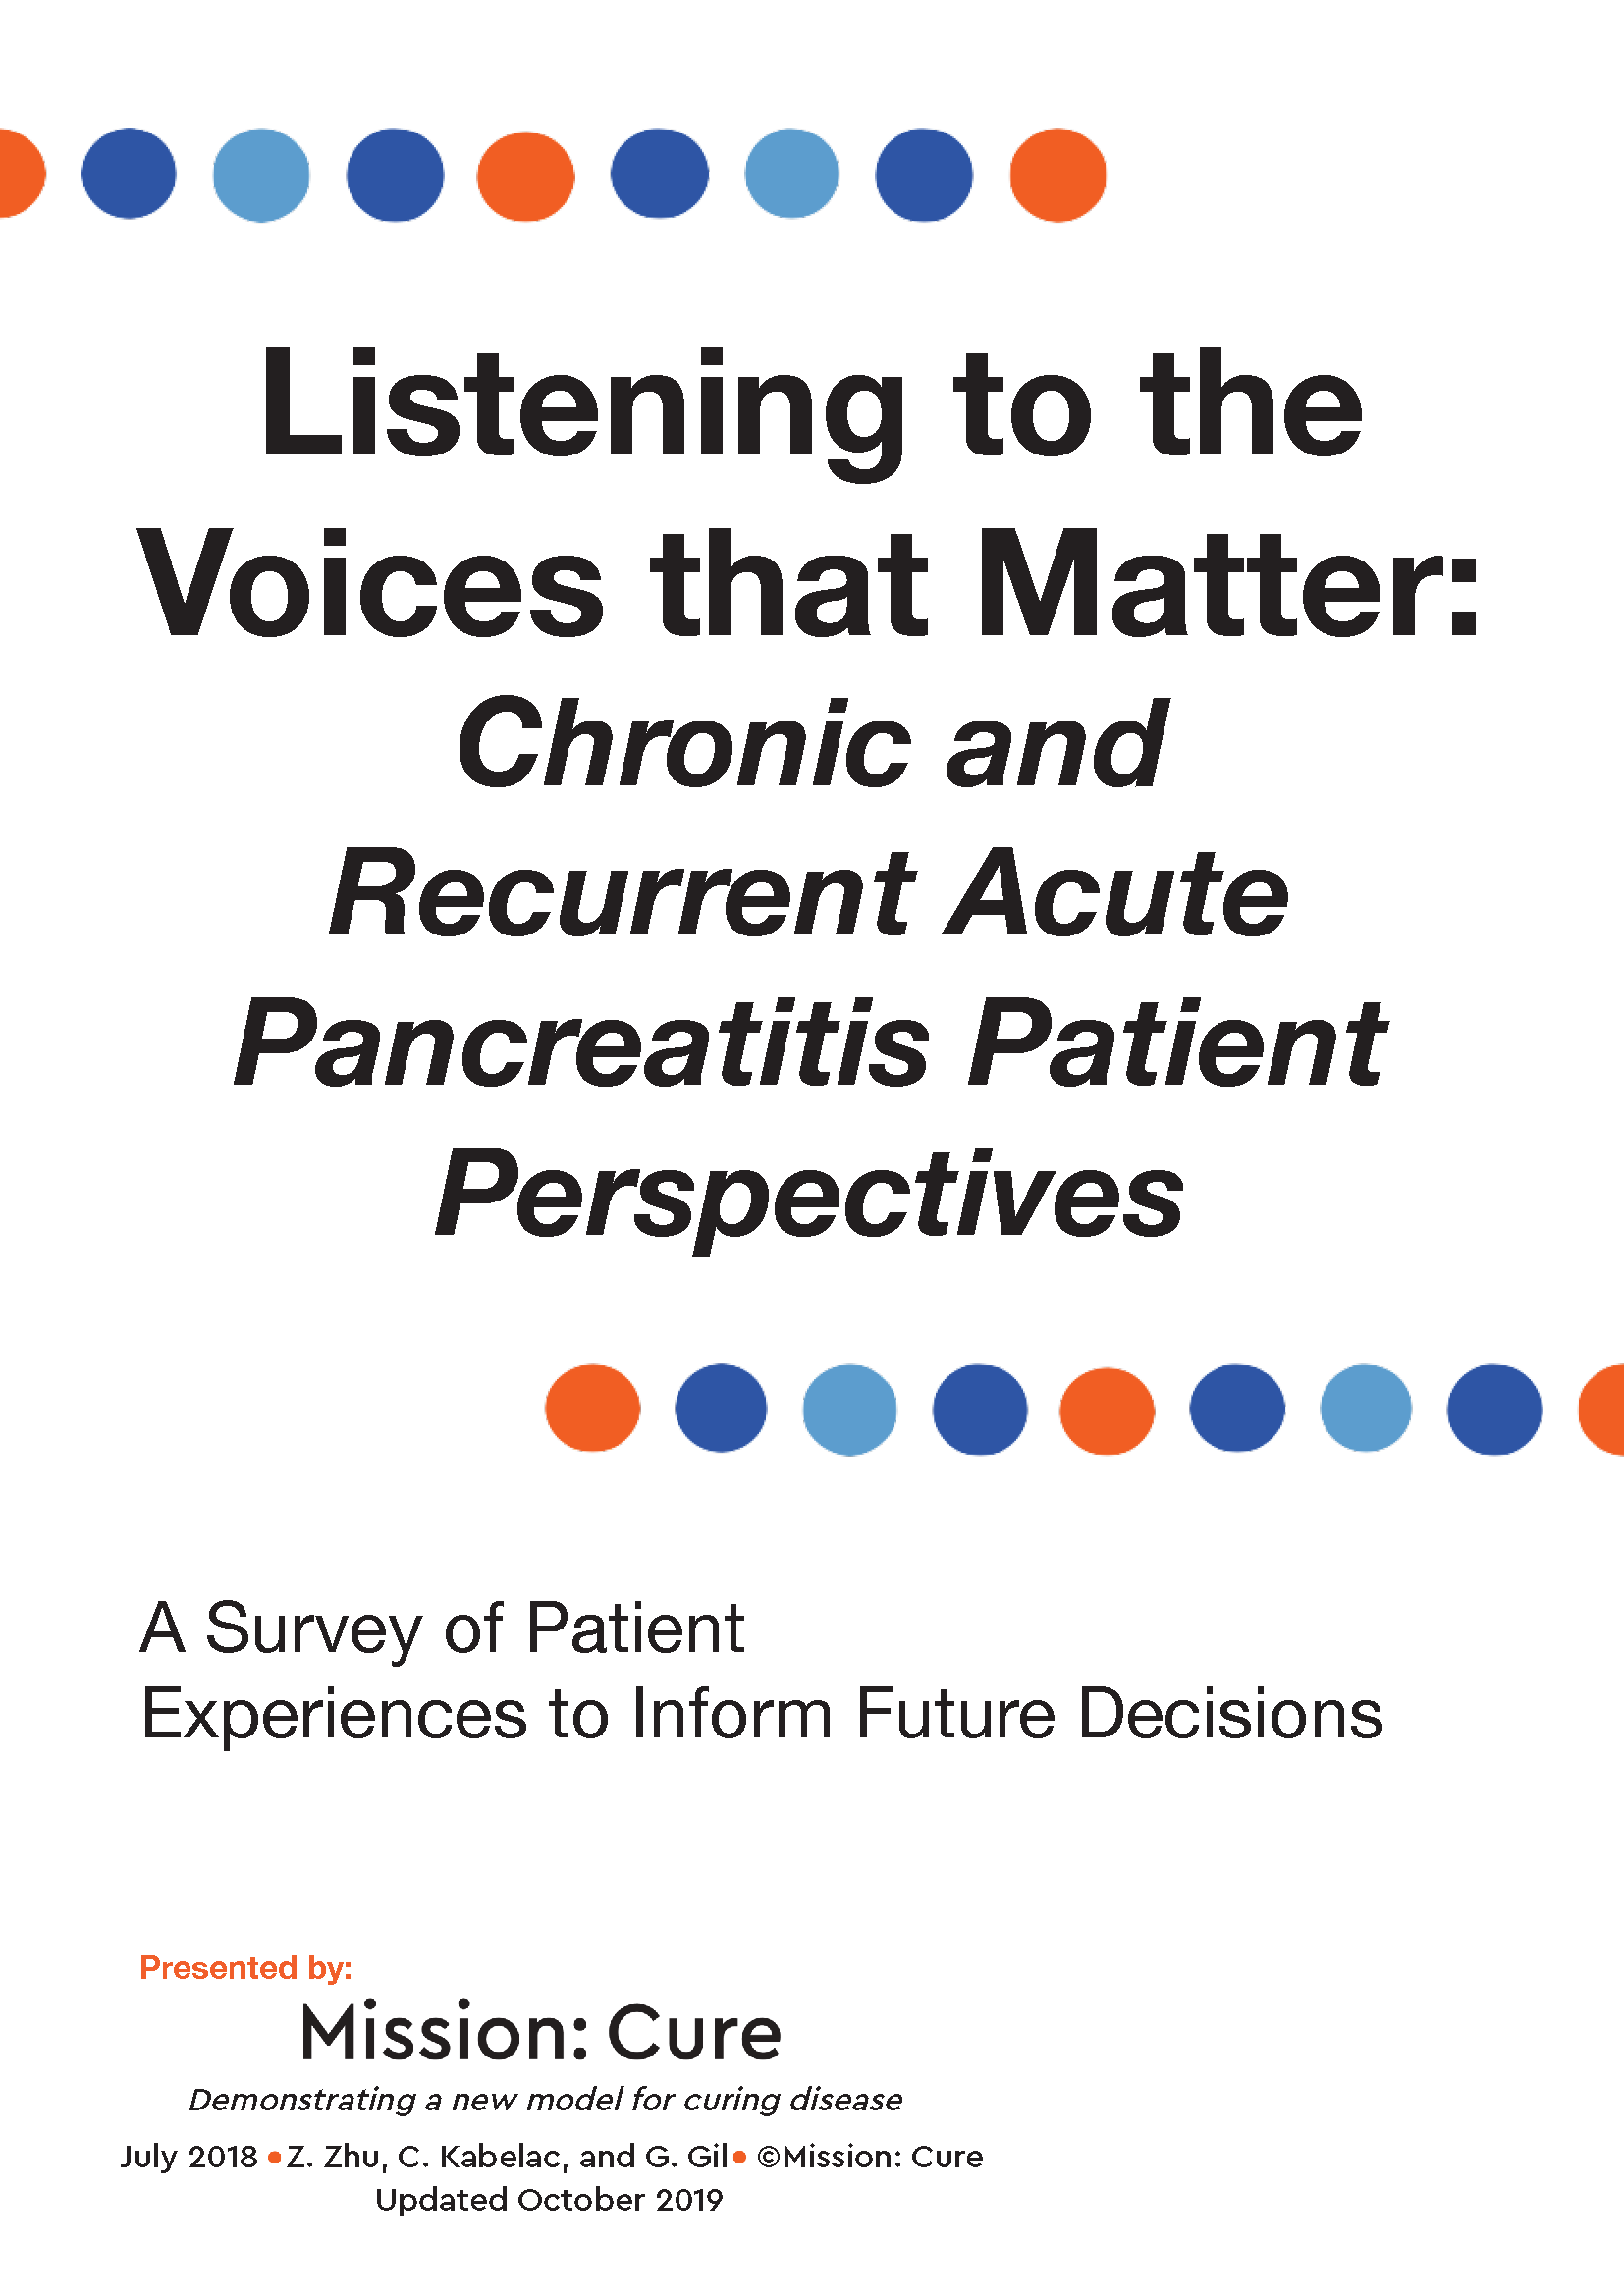 Chronic Pancreatitis and Recurrent Acute Pancreatitis Patient Perspectives Survey_Page_01